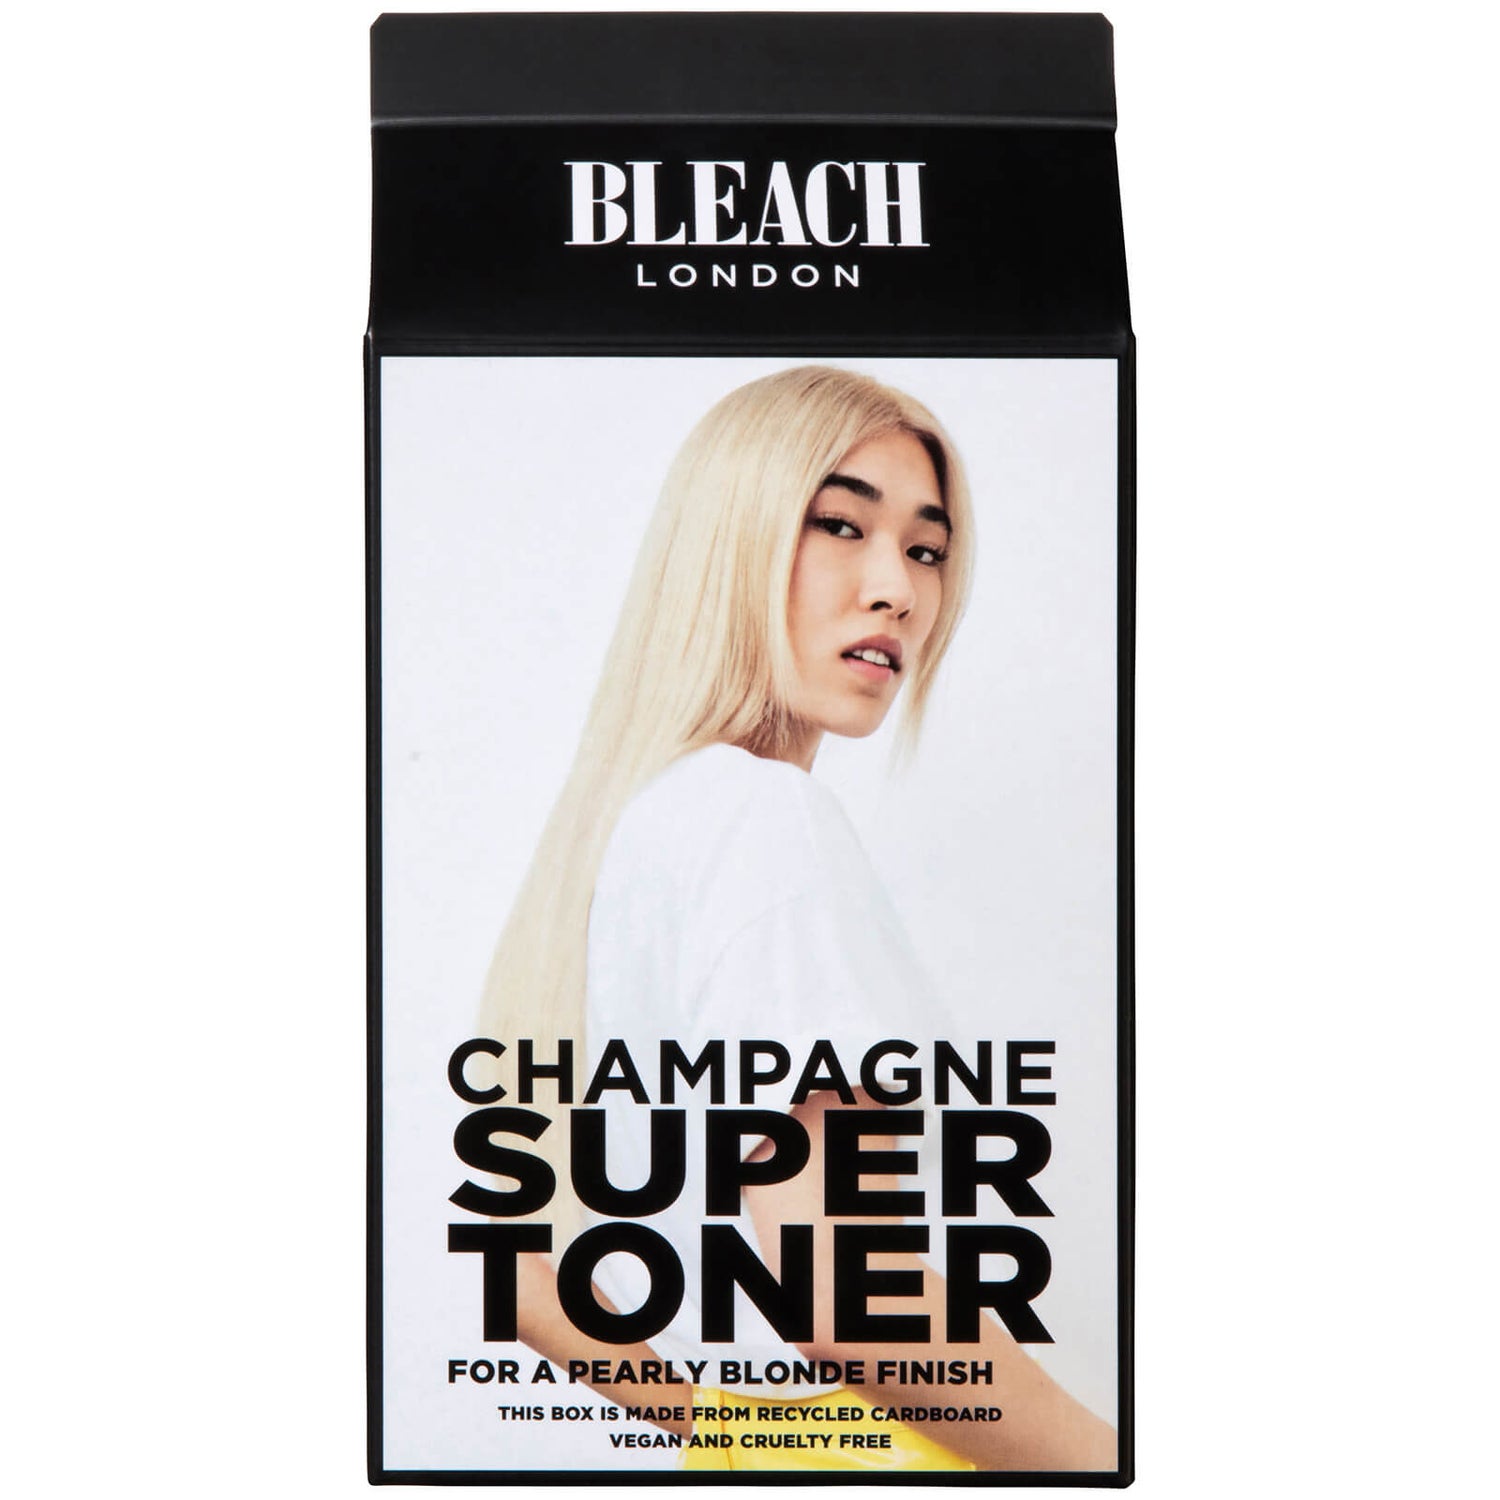 BLEACH LONDON Champagne Super Toner